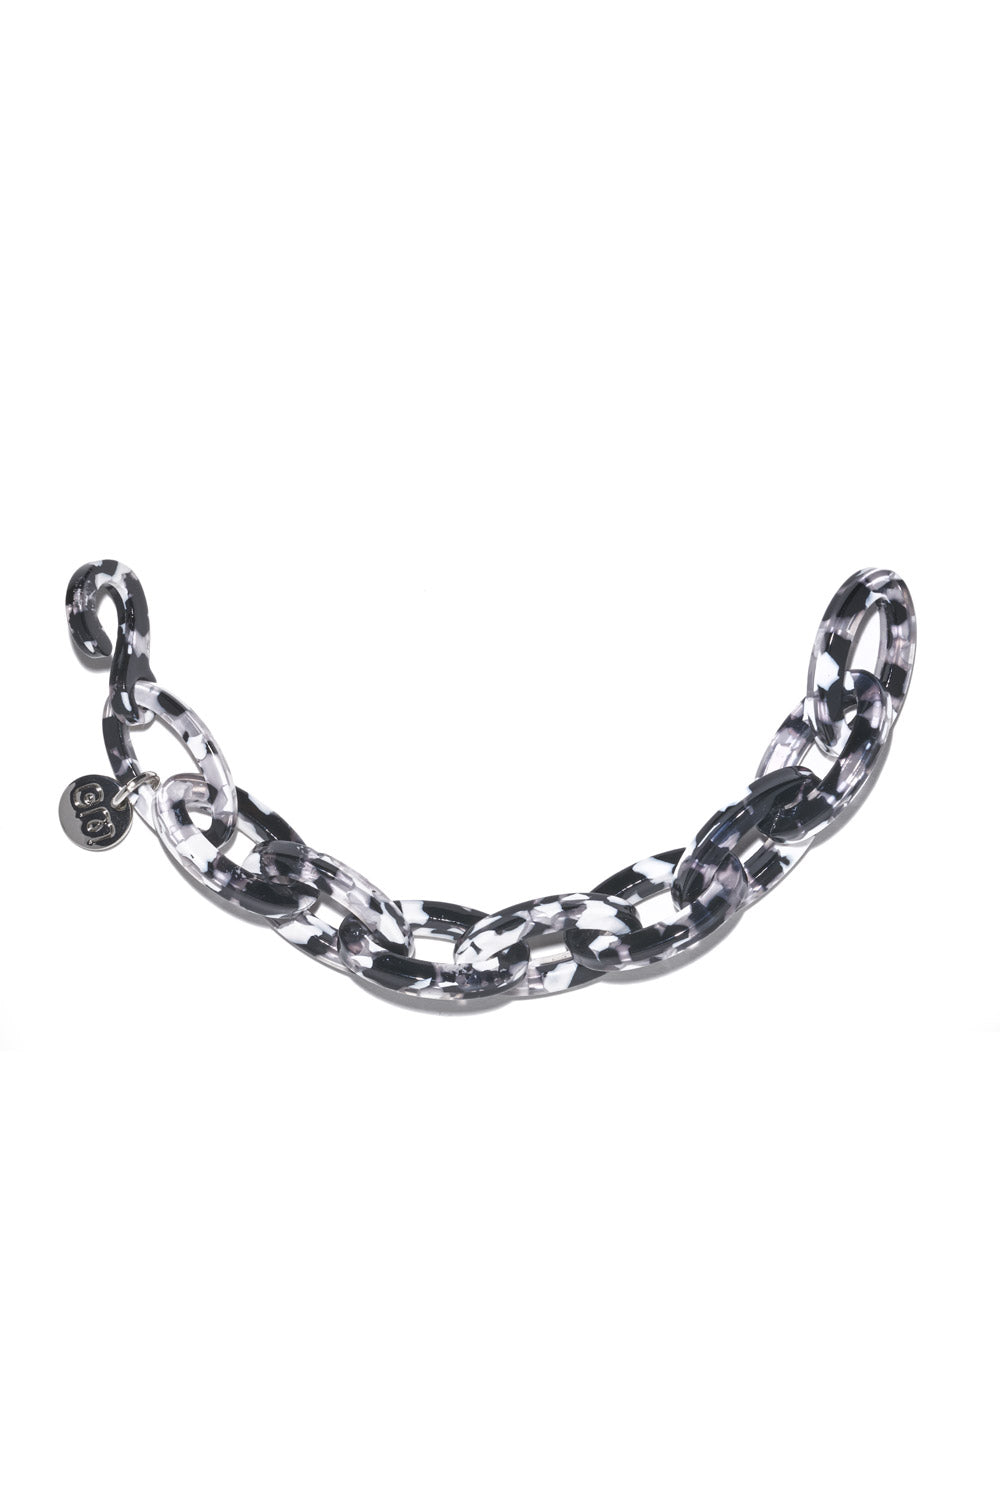 Bianca Mavrick Jewellery Chain Link Bracelet Arc Shaped Static